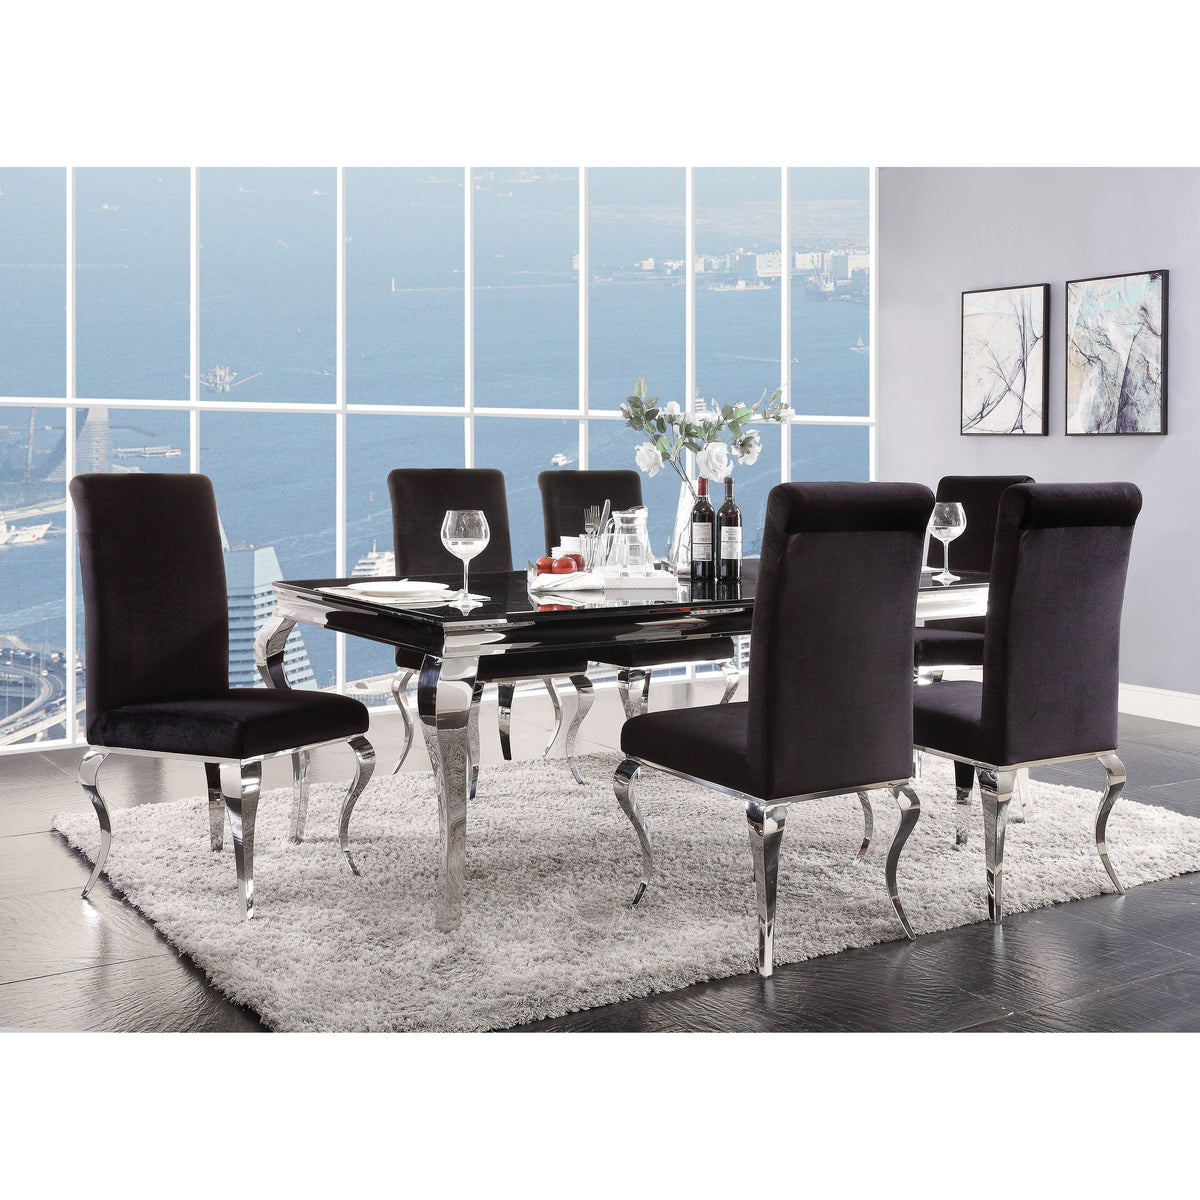 Fabiola Stainless Steel & Black Glass Dining Room Set  Las Vegas Furniture Stores